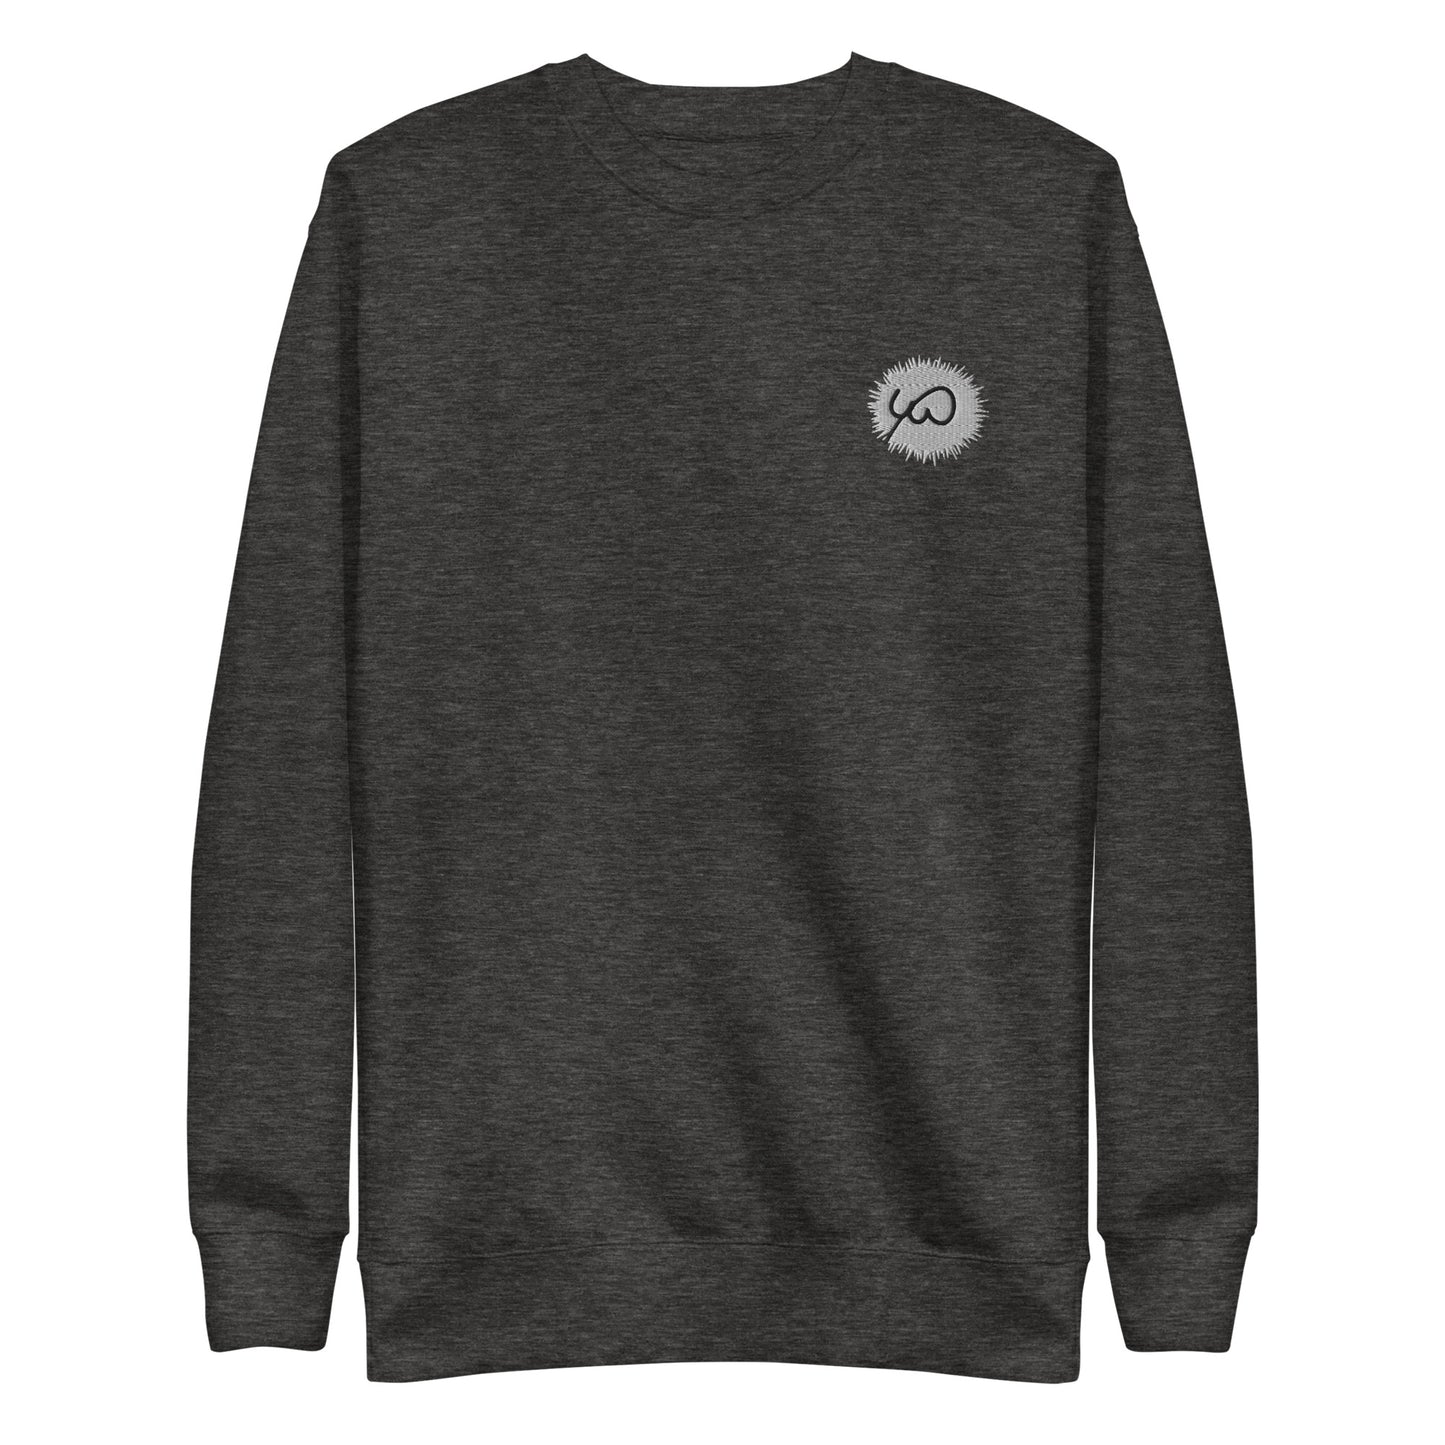 Dark Gray Unisex Premium Sweatshirt -Front design with Black and White Embroidery of Uniwari Logo